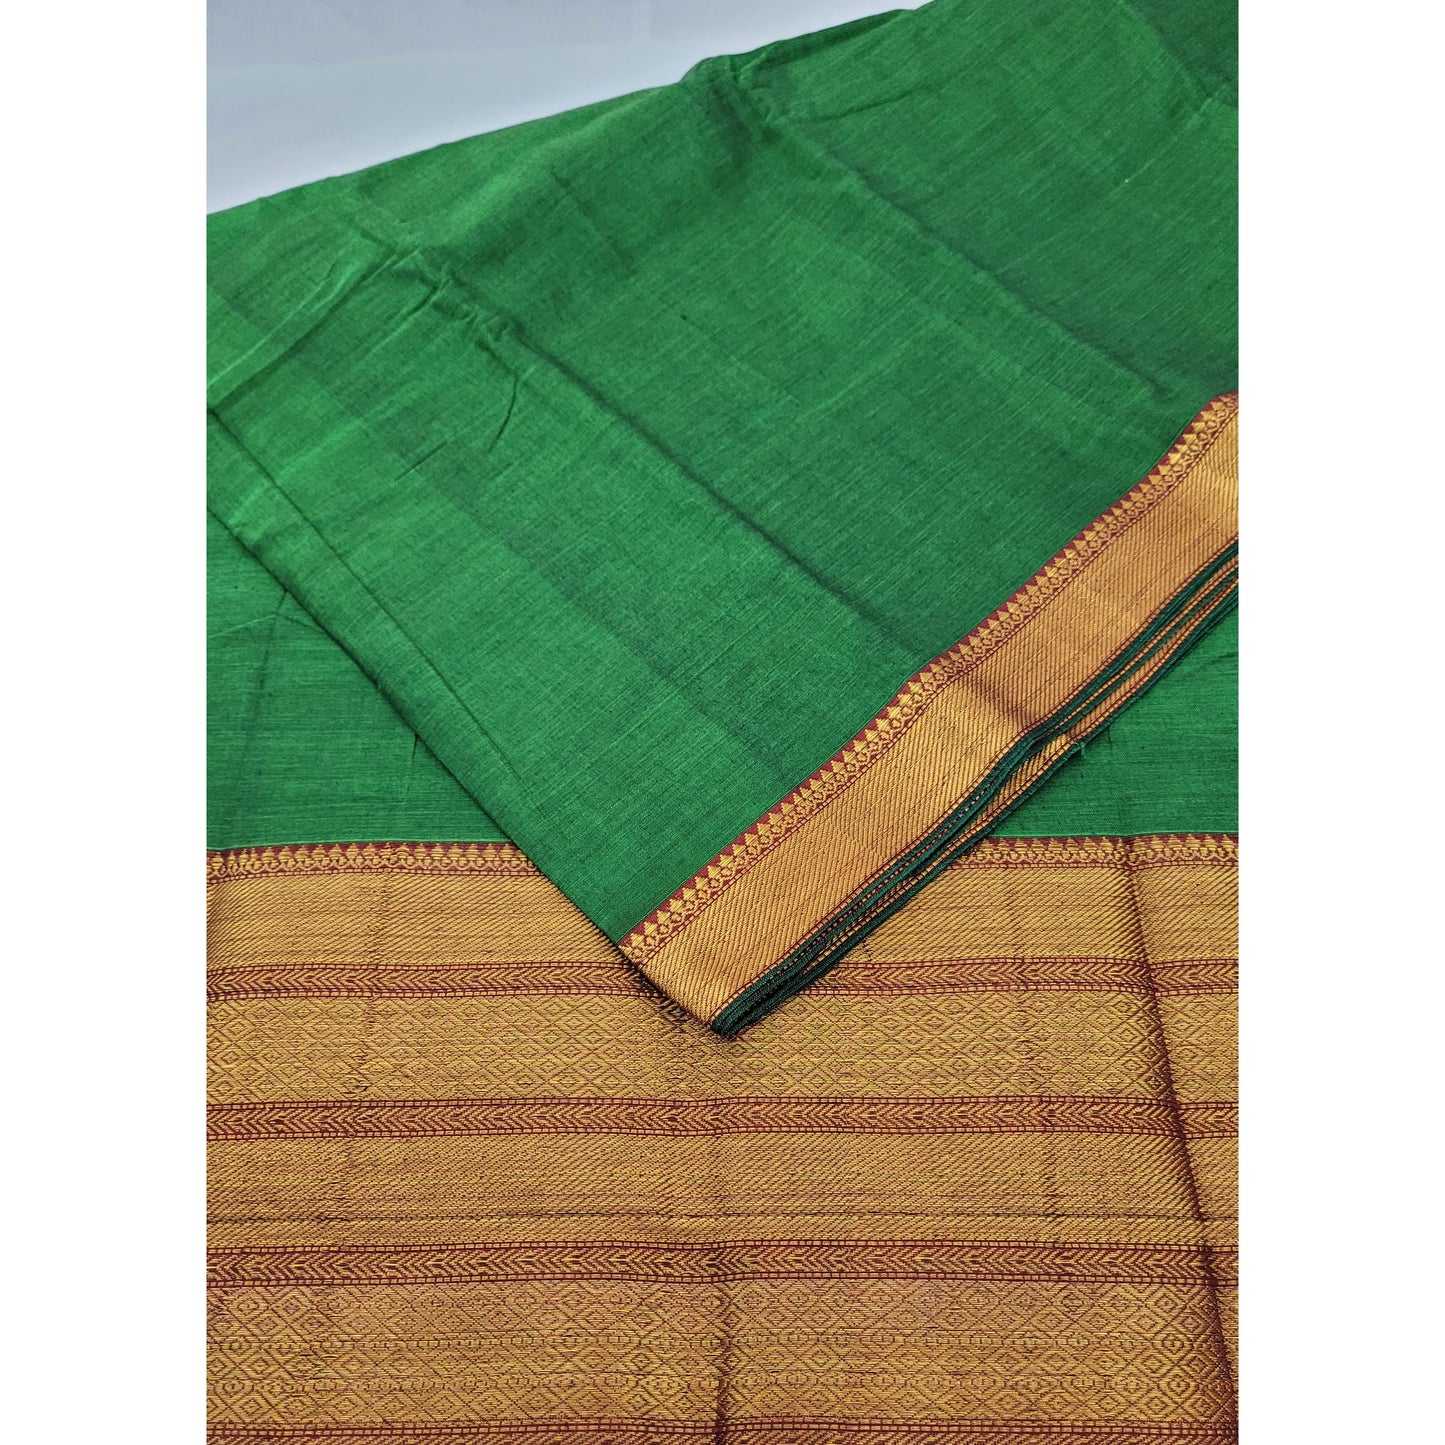 Green Color Narayanpet pure cotton zari border fabric - Vinshika